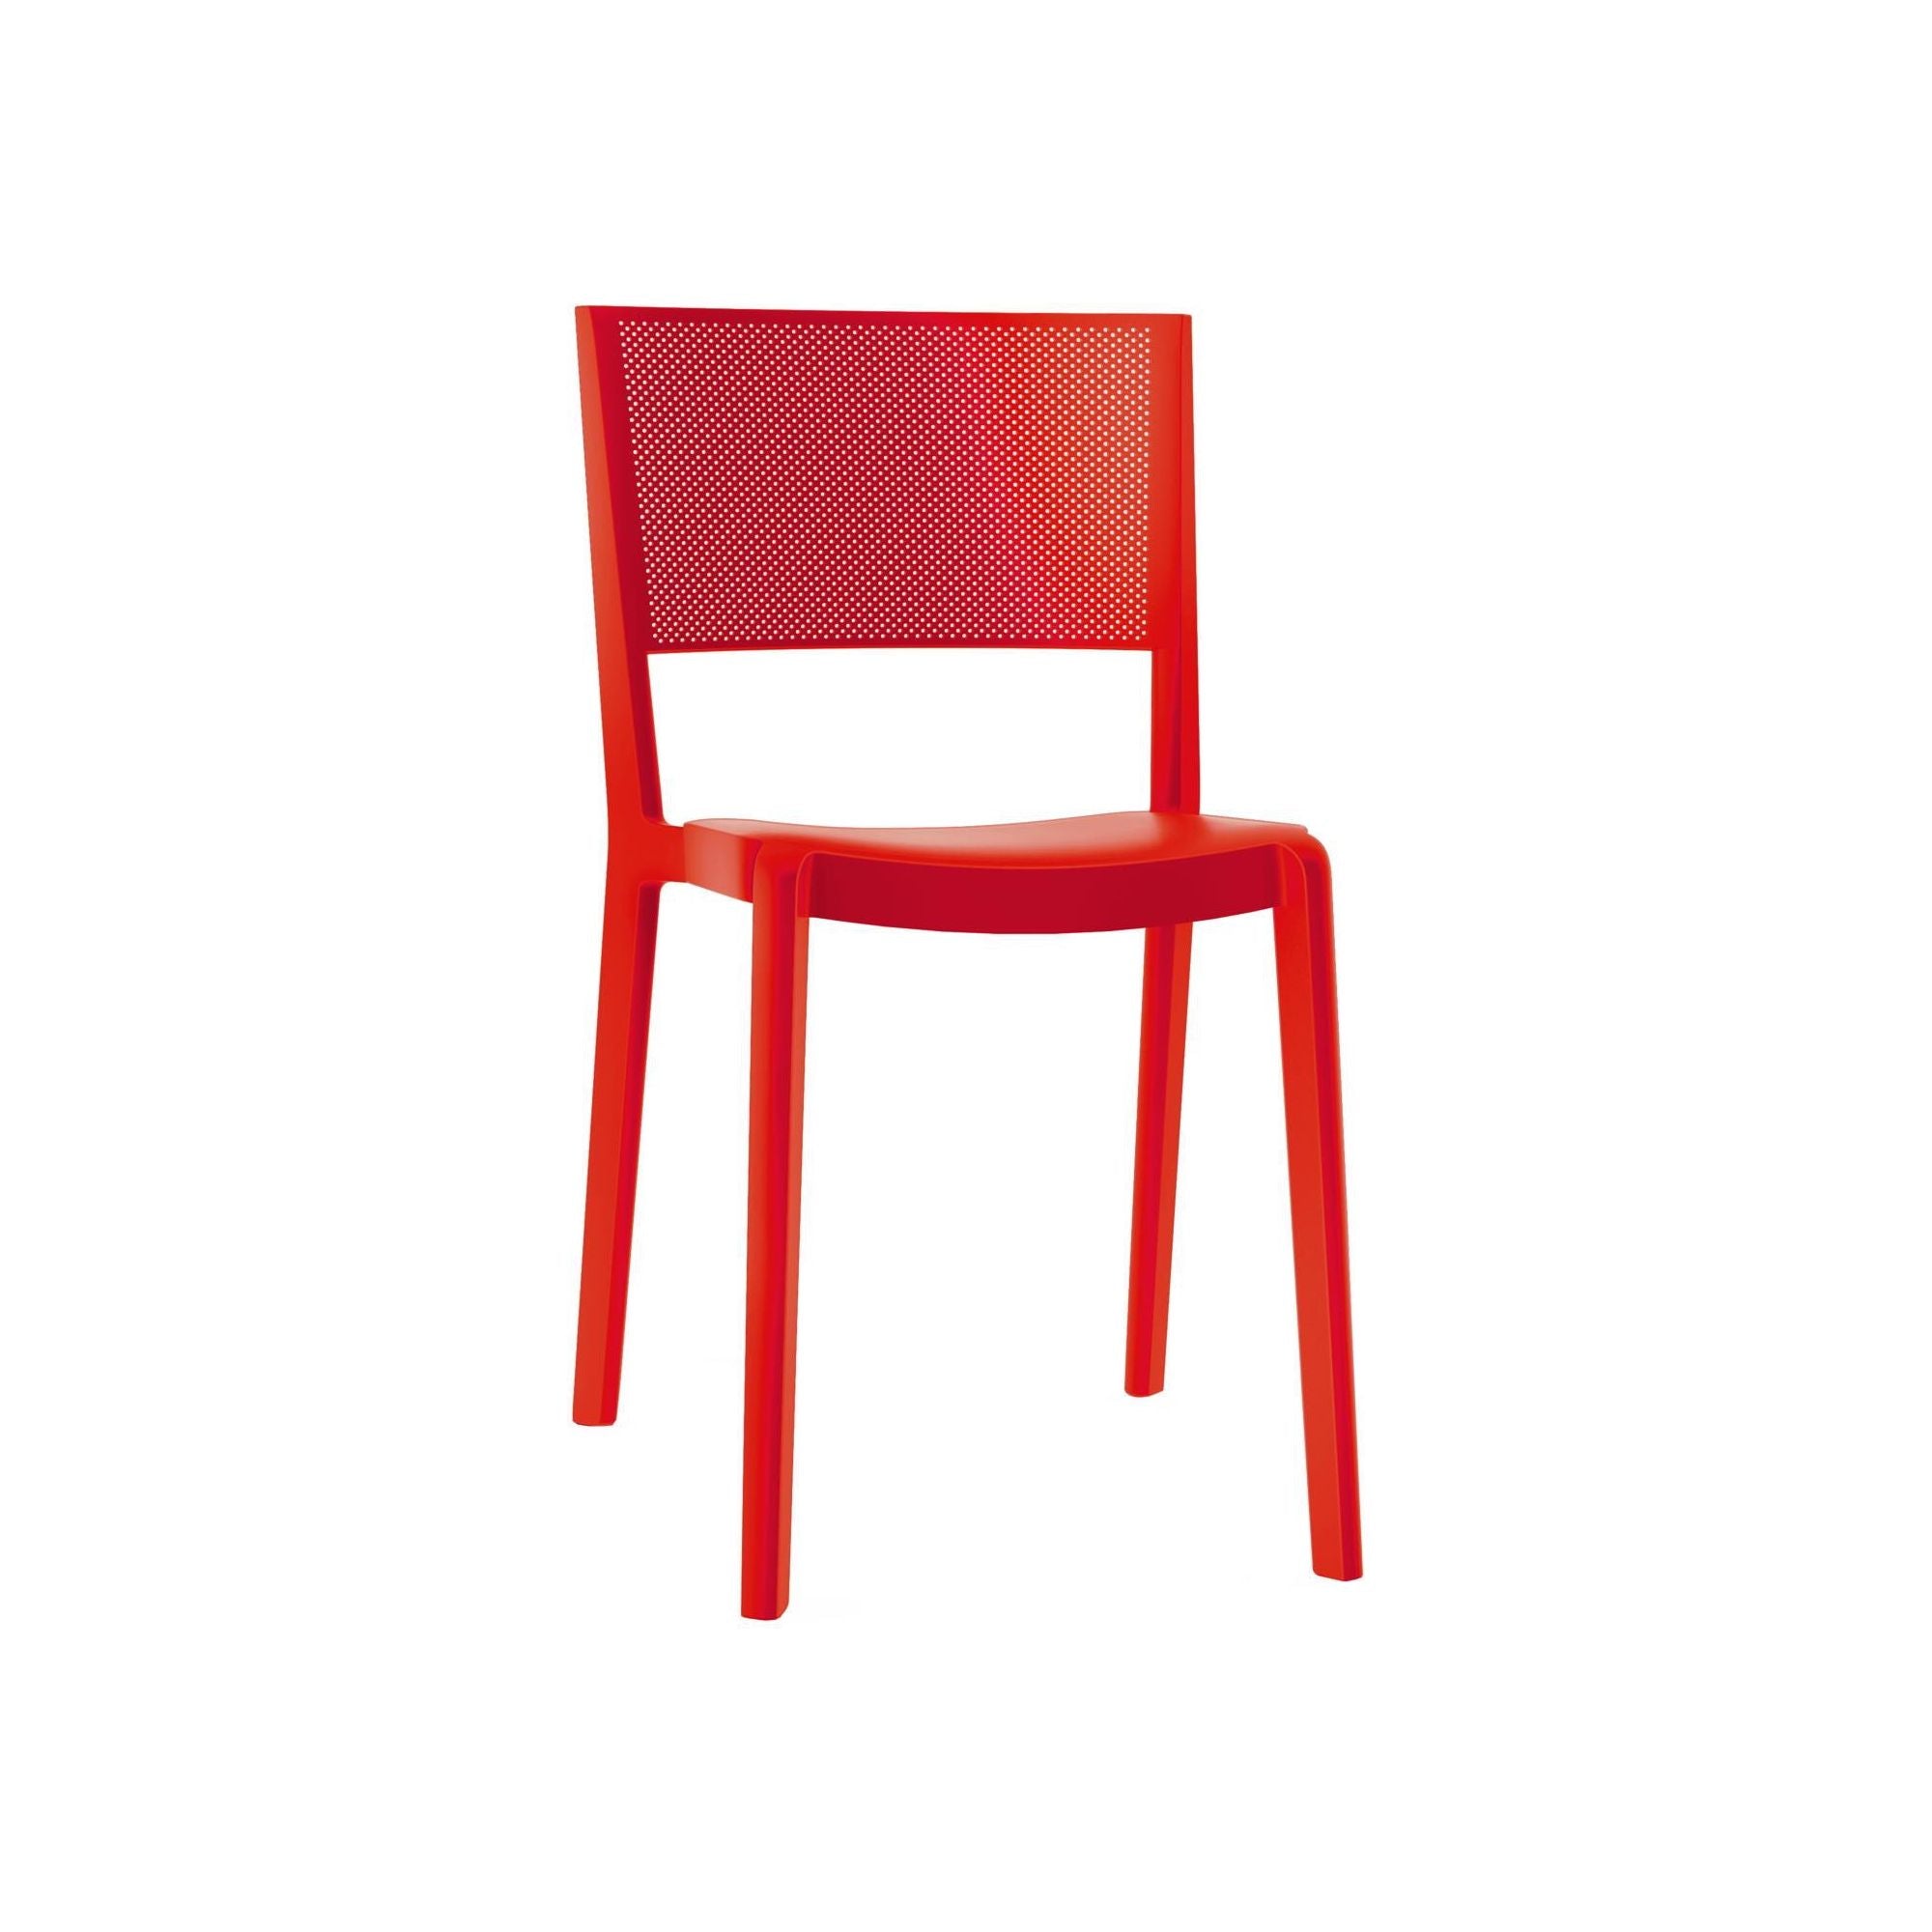 Resol spot chair inside, red outside